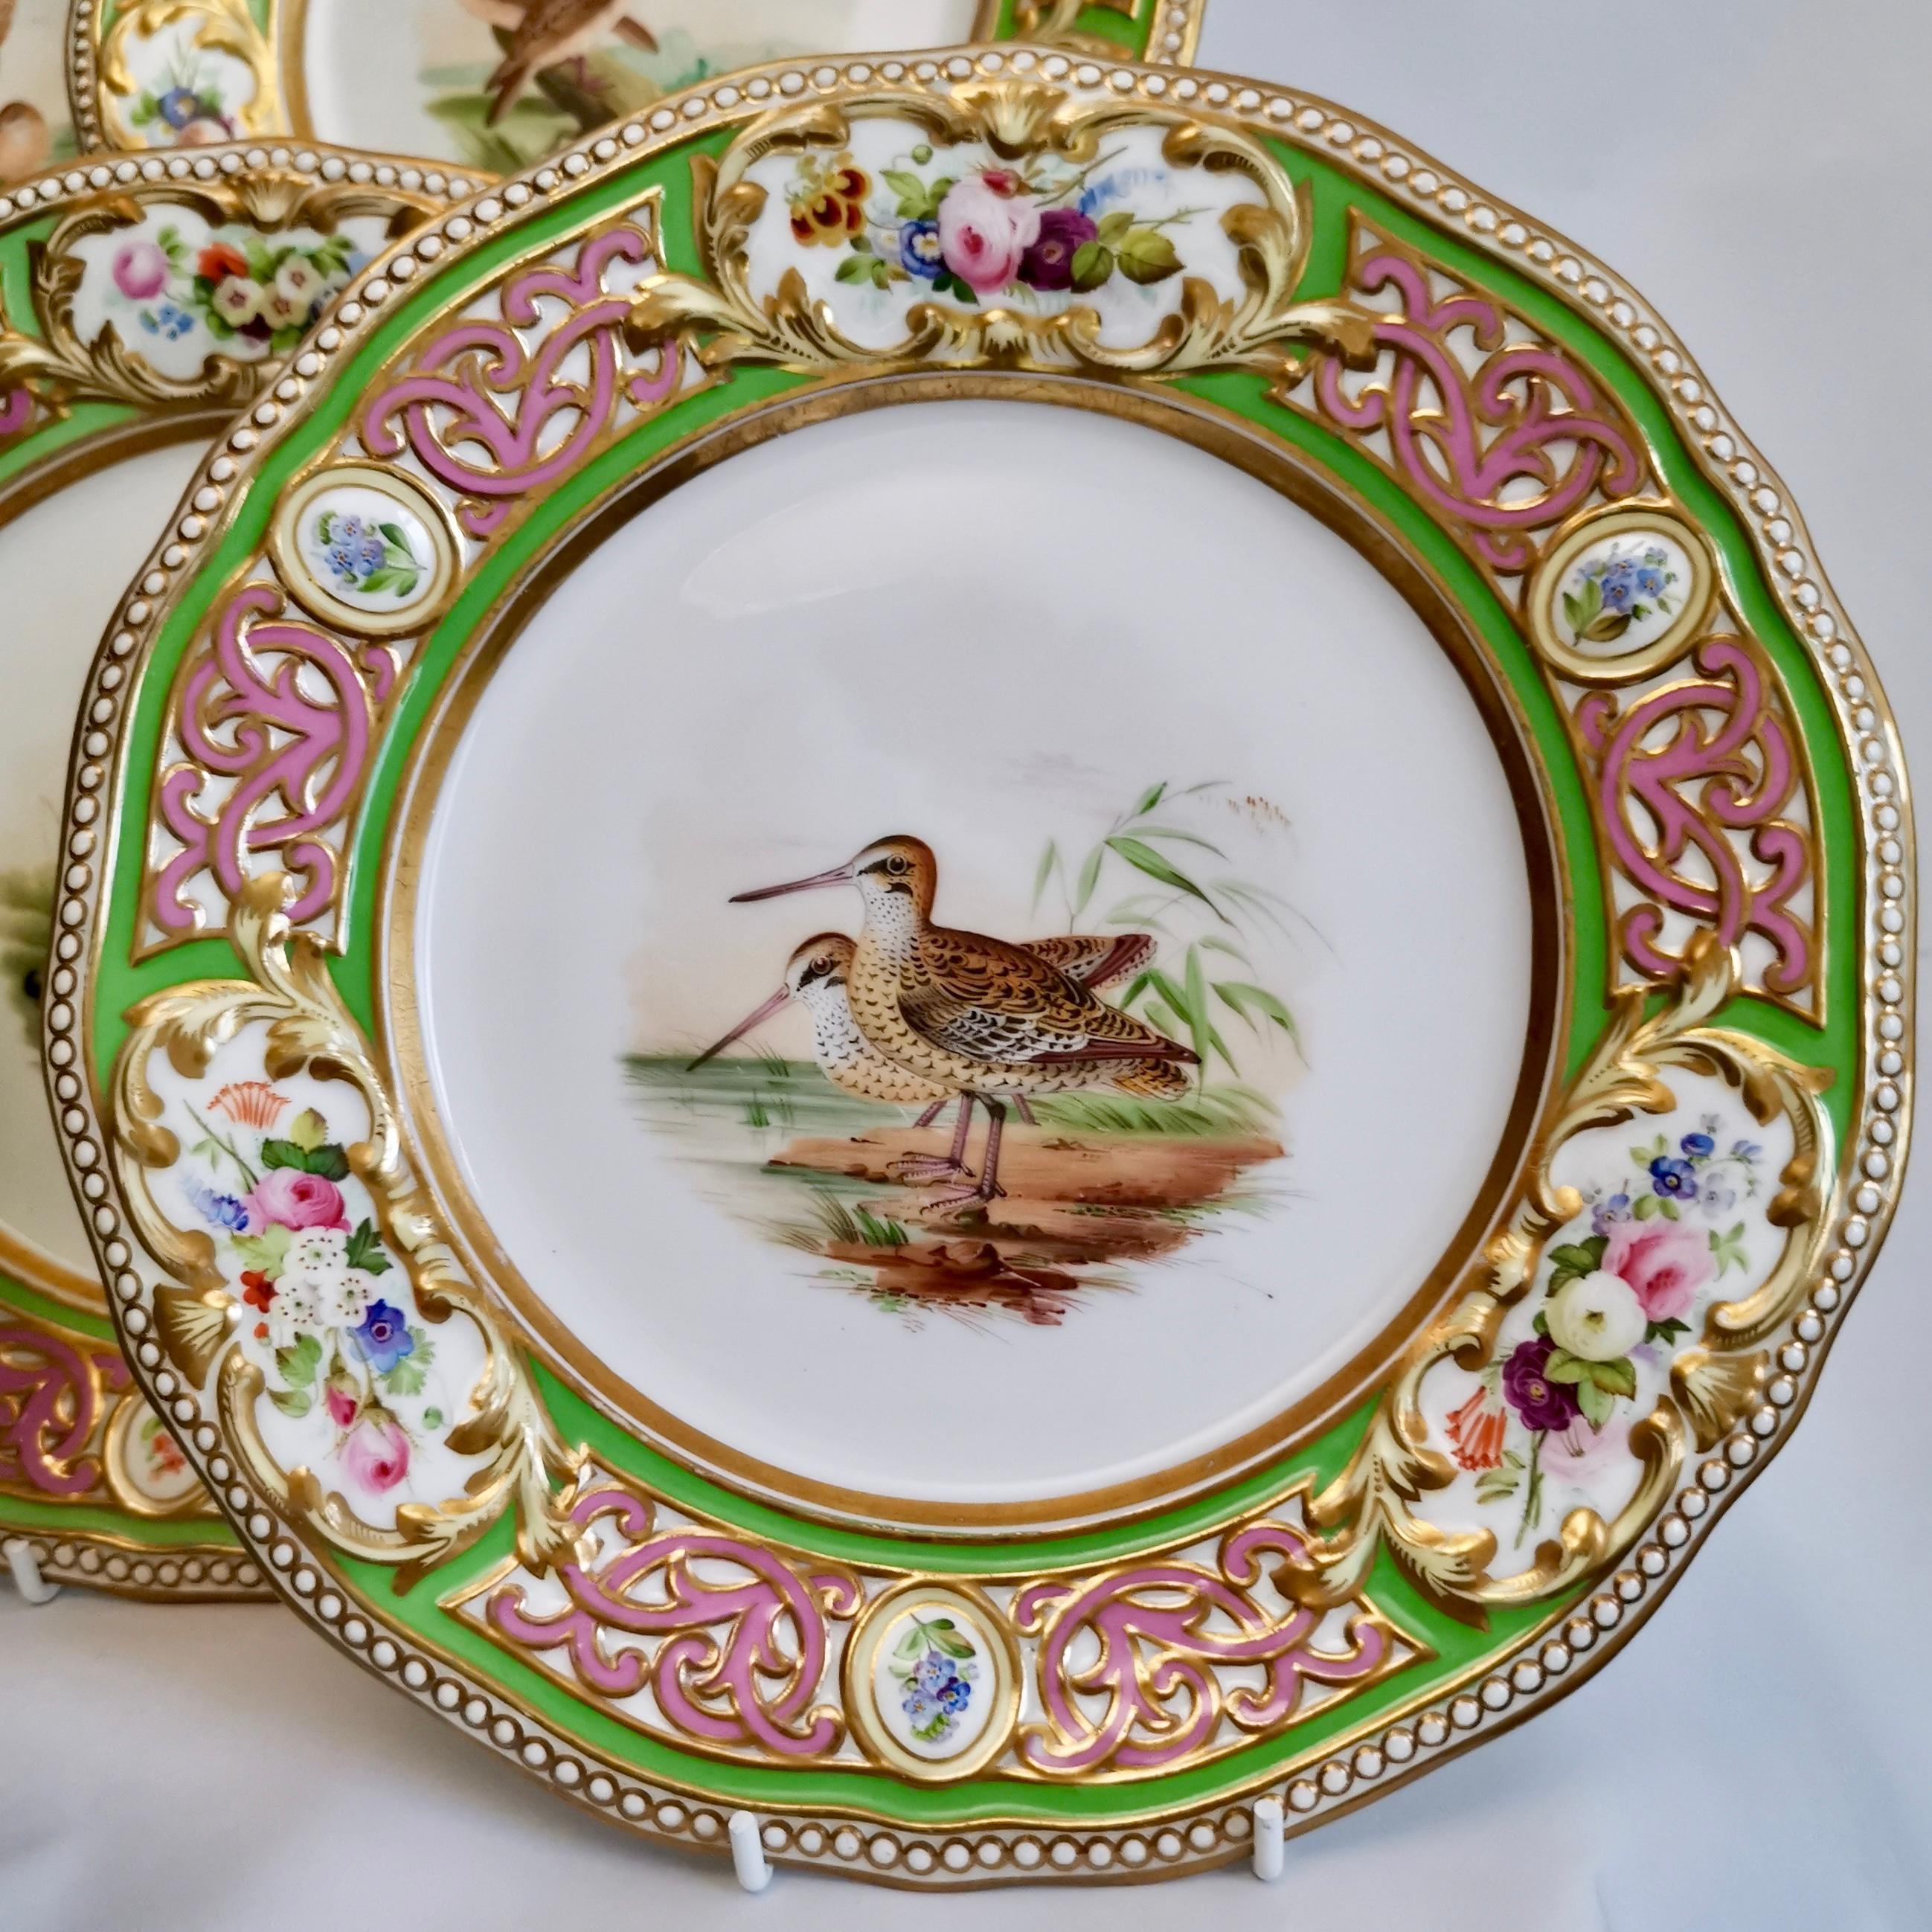 Hand-Painted Grainger Worcester Porcelain Dessert Service, Persian Revival with Birds, 1855